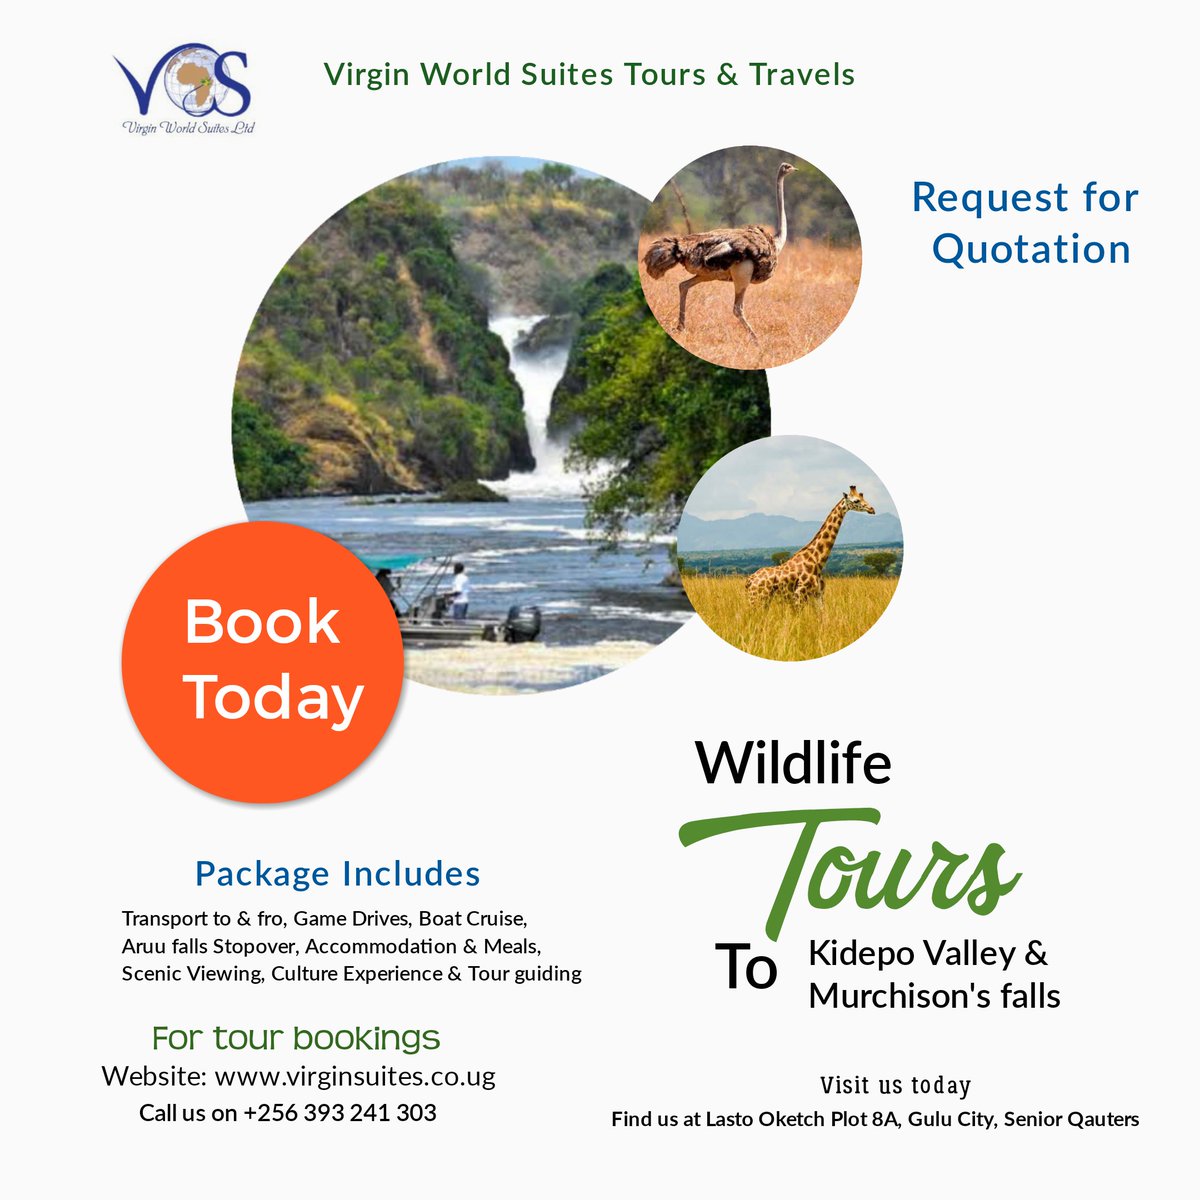 Visit Kidepo valley & Murchison's falls with us today
#visitKidepo #VisitMurchisonfalls 
#VirginWorldSuites #PrivateTours #Holidaytours #WildlifeSafaris